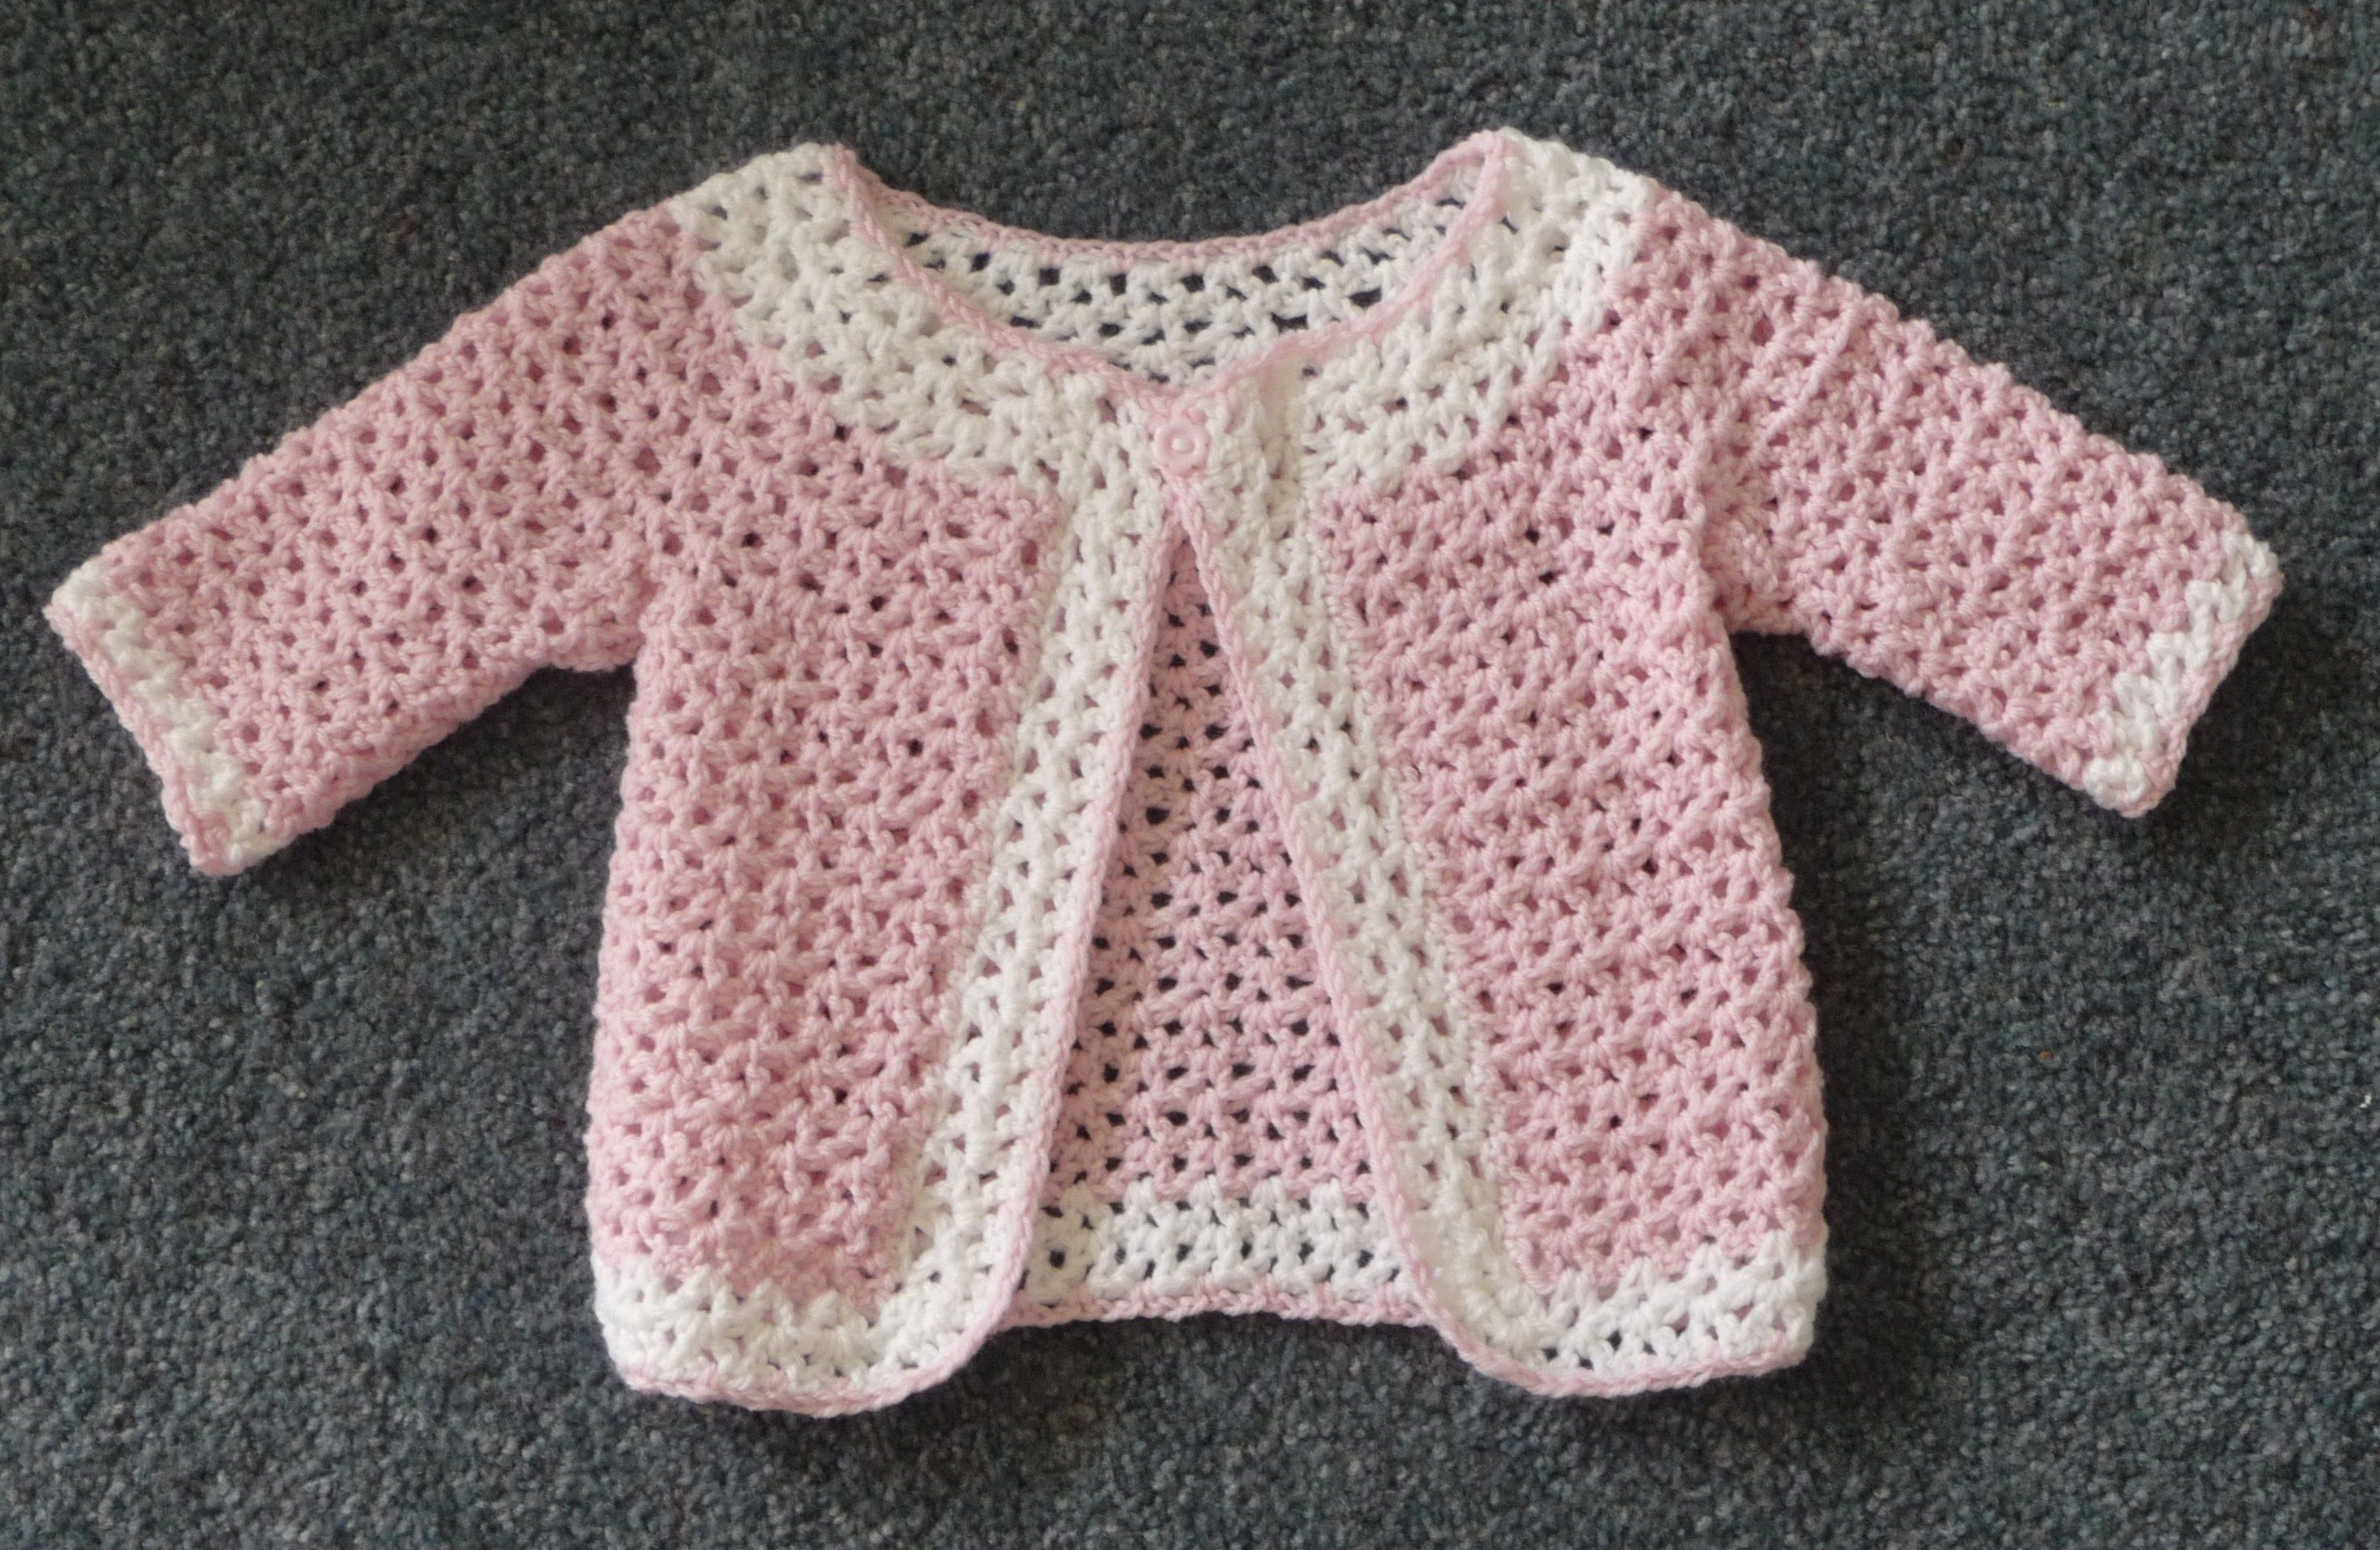 Crochet Baby Sweater Patterns V Stitch Cardigan Knitting And Crochet For Babieschildren